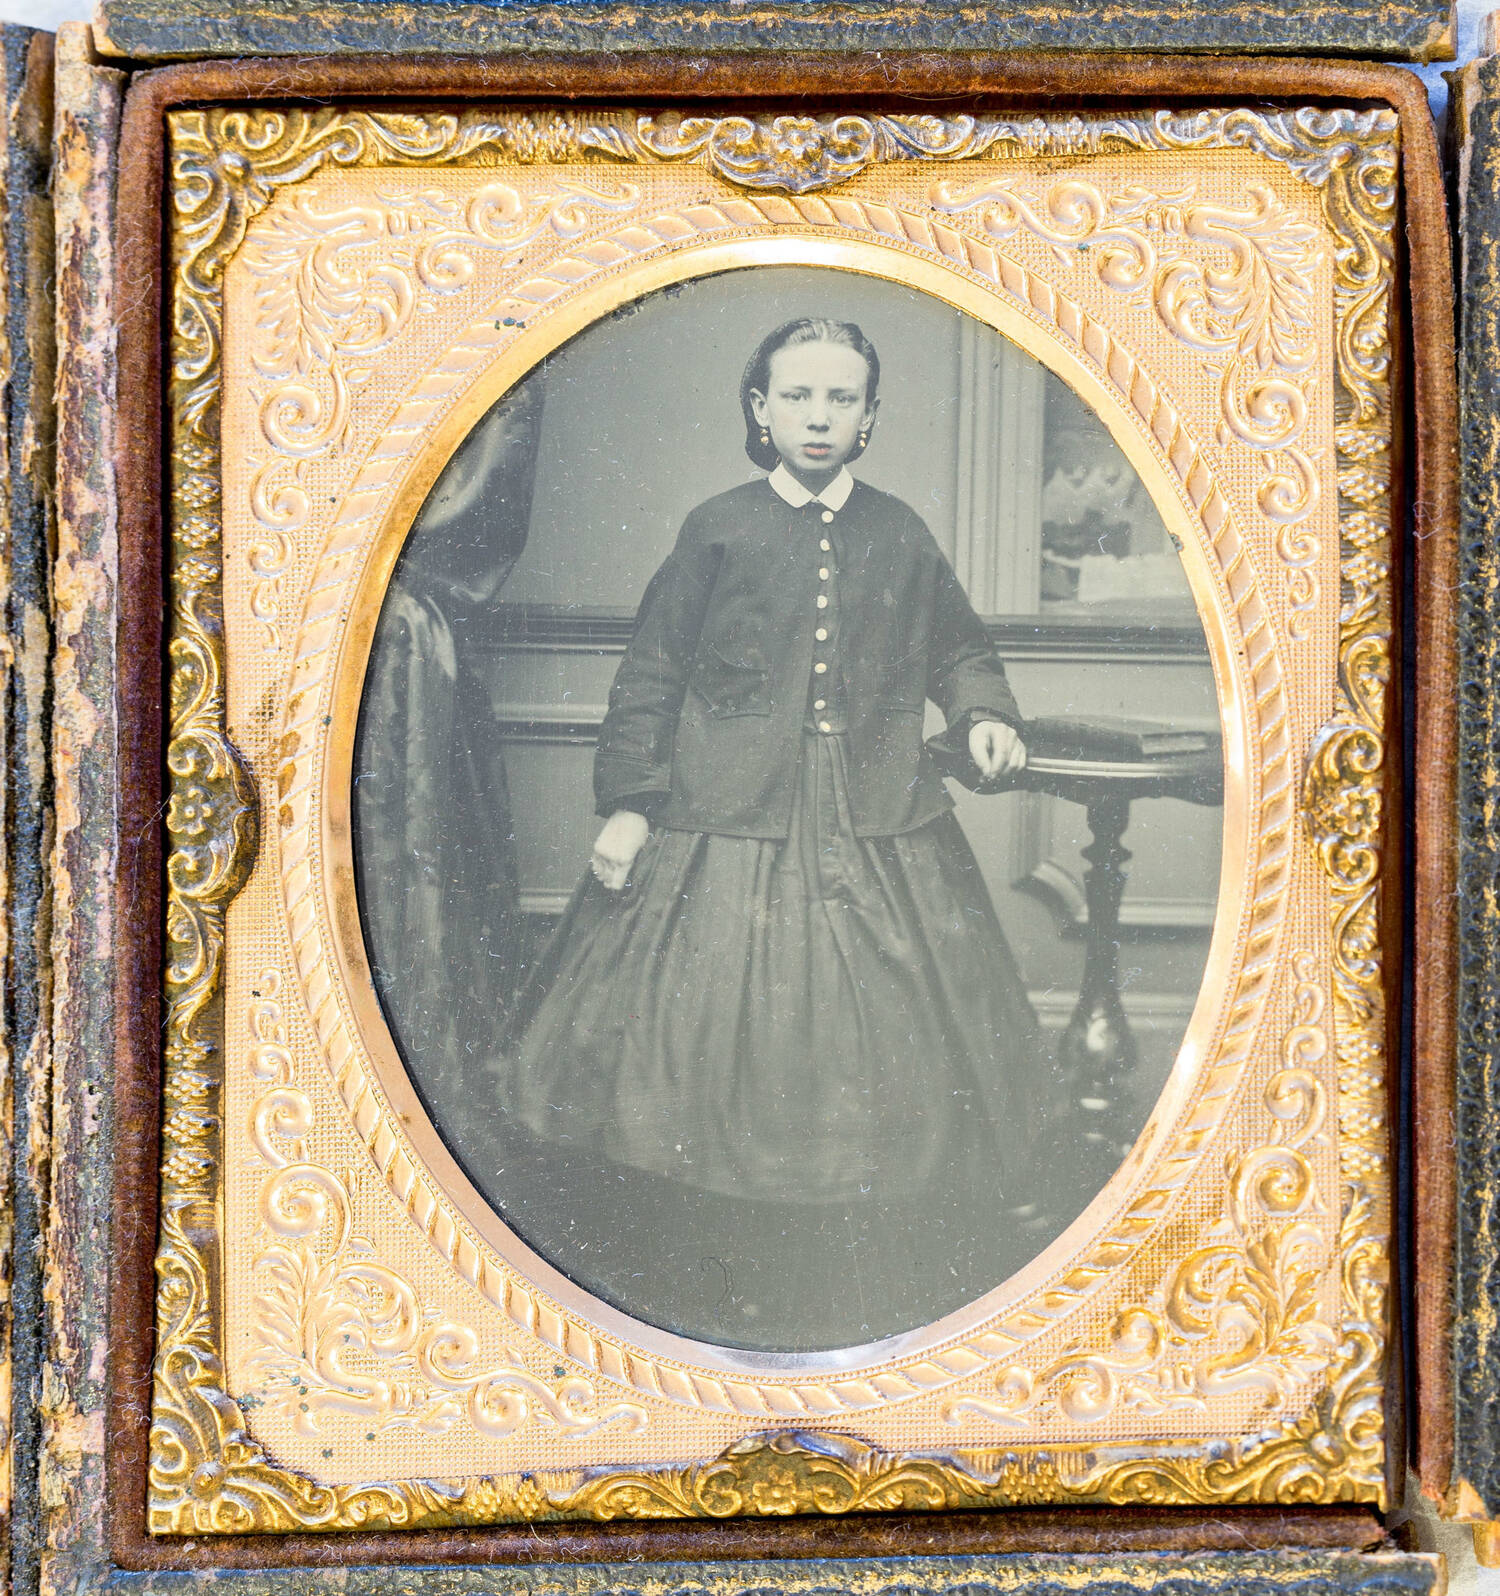 Original Victorian 5 x 4 Glass Plate Negative Photo Woman Portrait Everyday Image